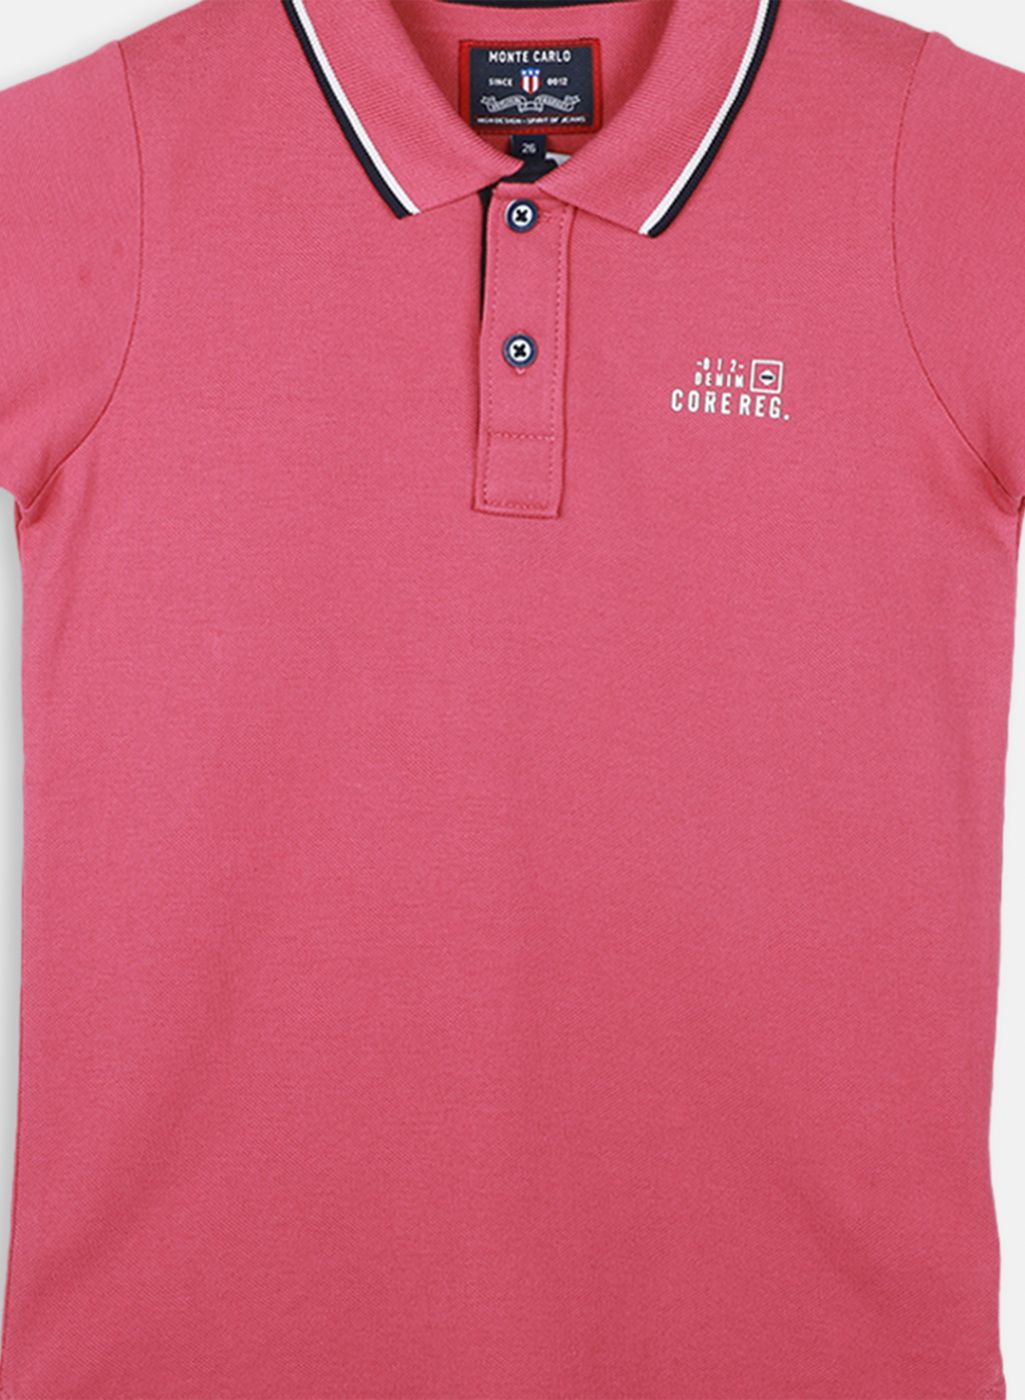 Boys Pink Printed T-Shirt